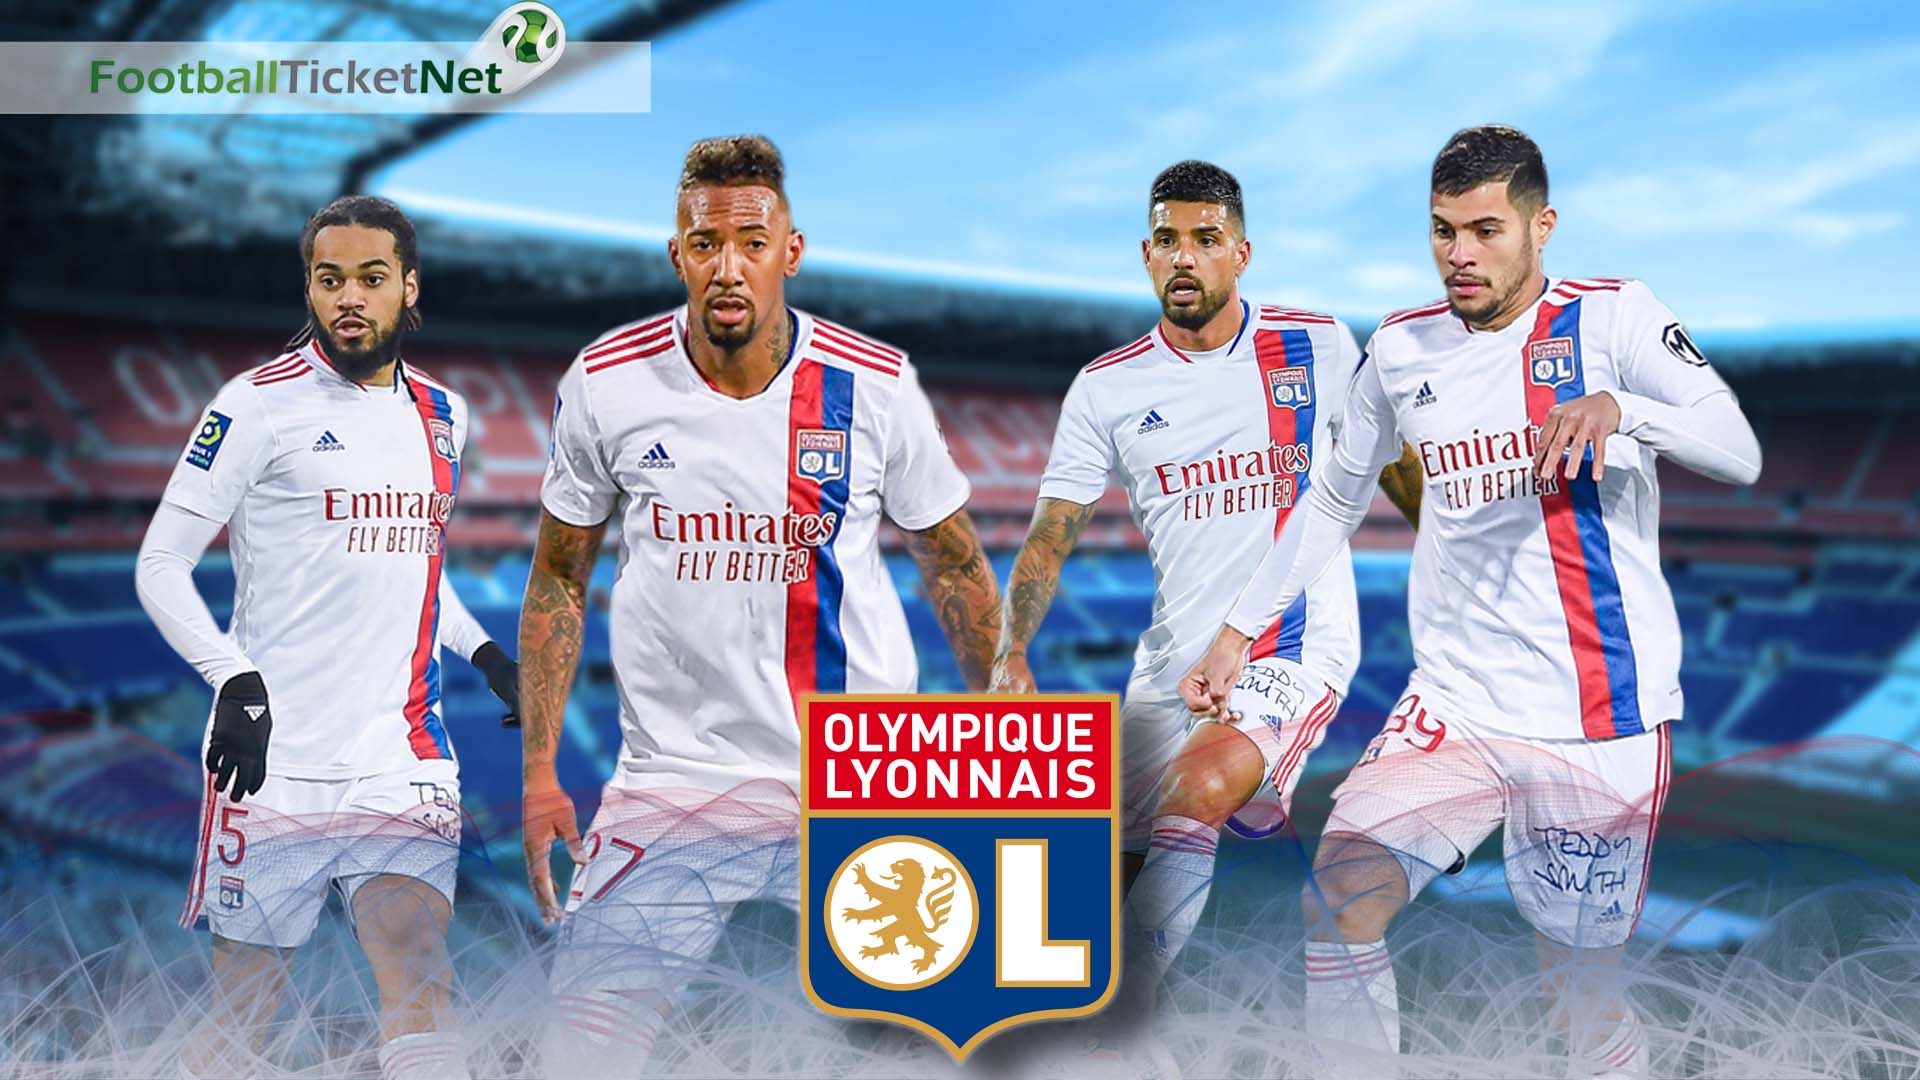 Buy Olympique Lyonnais Tickets 2023/24 - Football Ticket Net